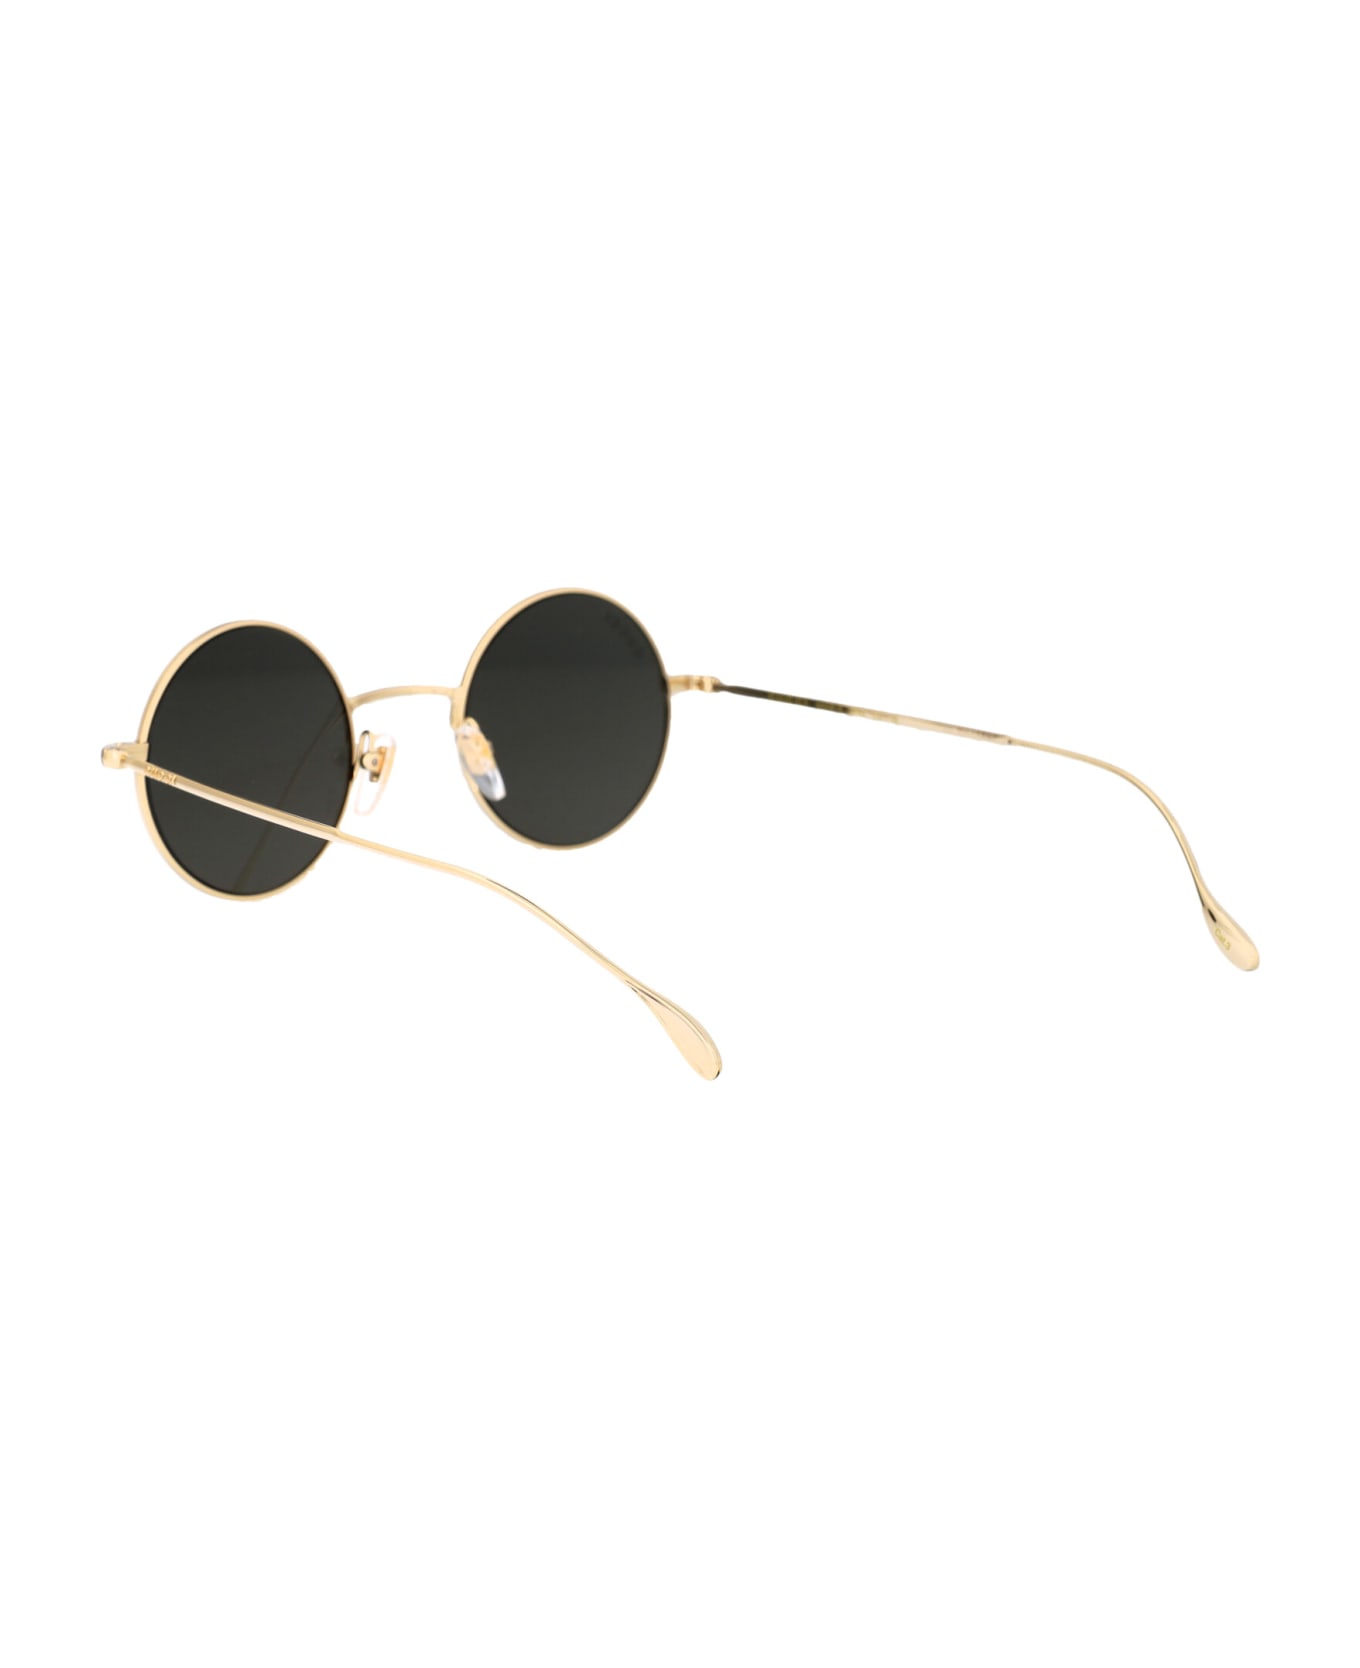 Gucci Eyewear Gg1649s Sunglasses - 007 GOLD GOLD GREY